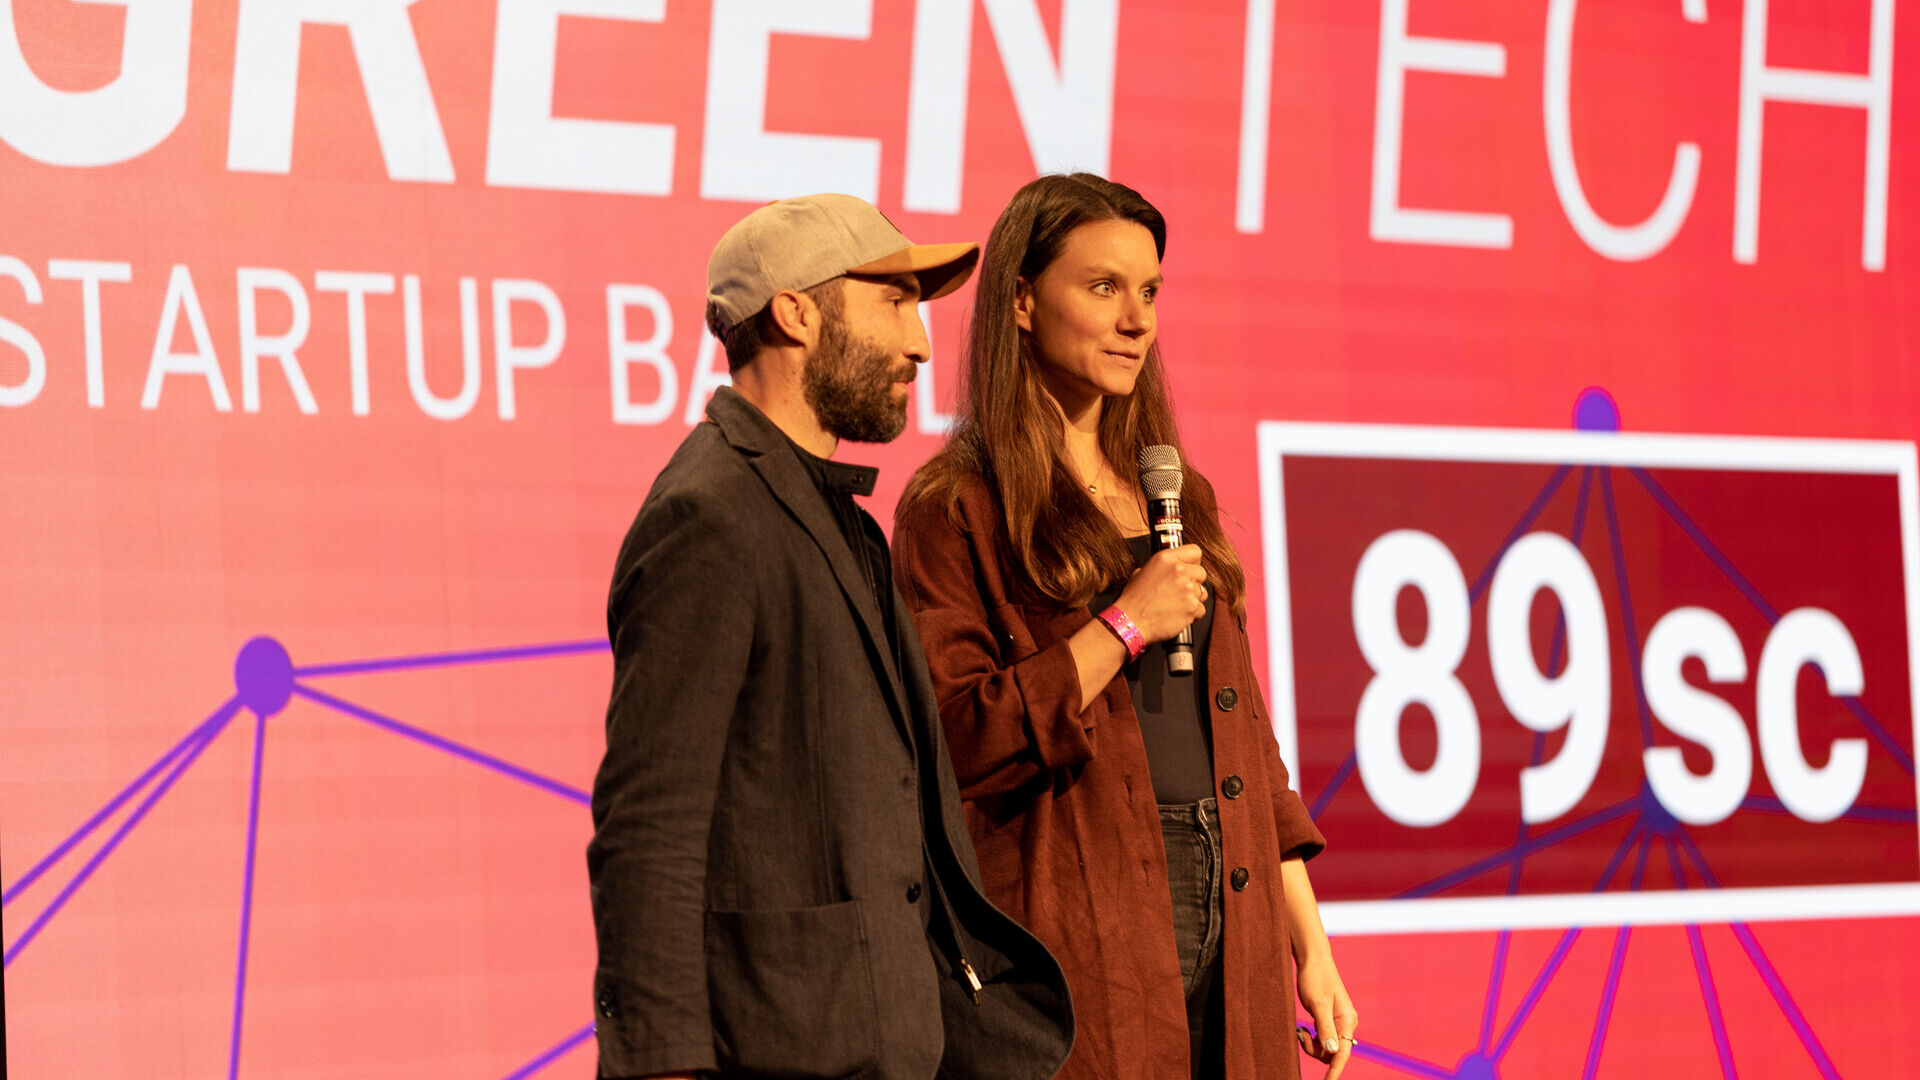 Swiss Digital Days: završni događaj "Swiss Digital Days" 2022. u Freiruumu u Zugu (Cug) 27. oktobra: ceremonija dodjele nagrada inicijative "Greentech Startup Battle" uz vibooovu pobjedu